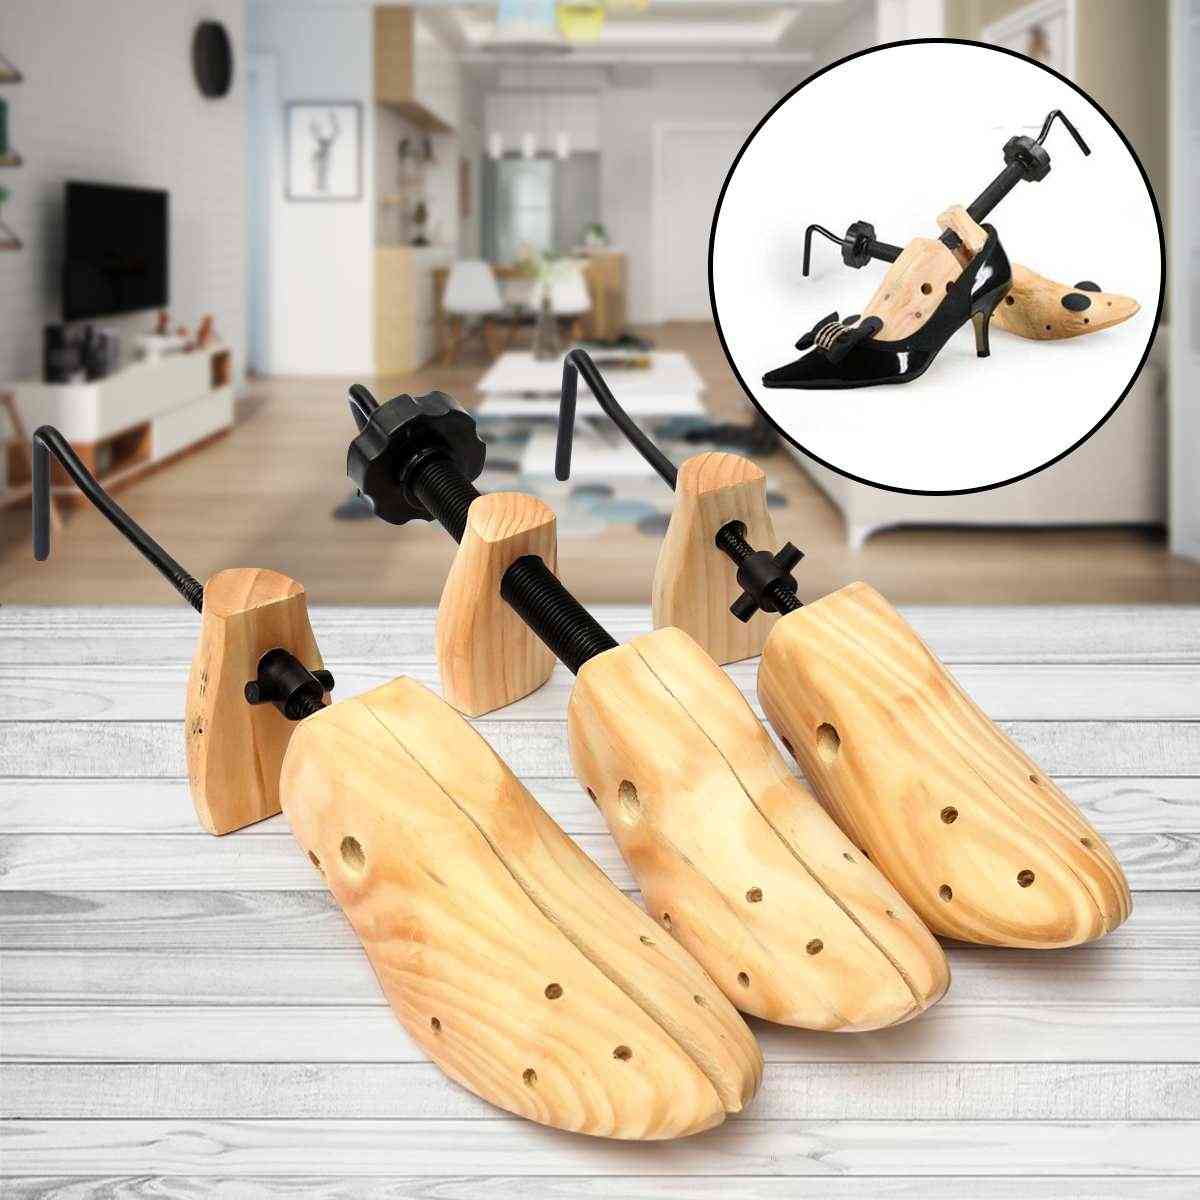 Stretcher Wooden- Adjustable Flats Pumps, Tree Shaper, Rack Shoes